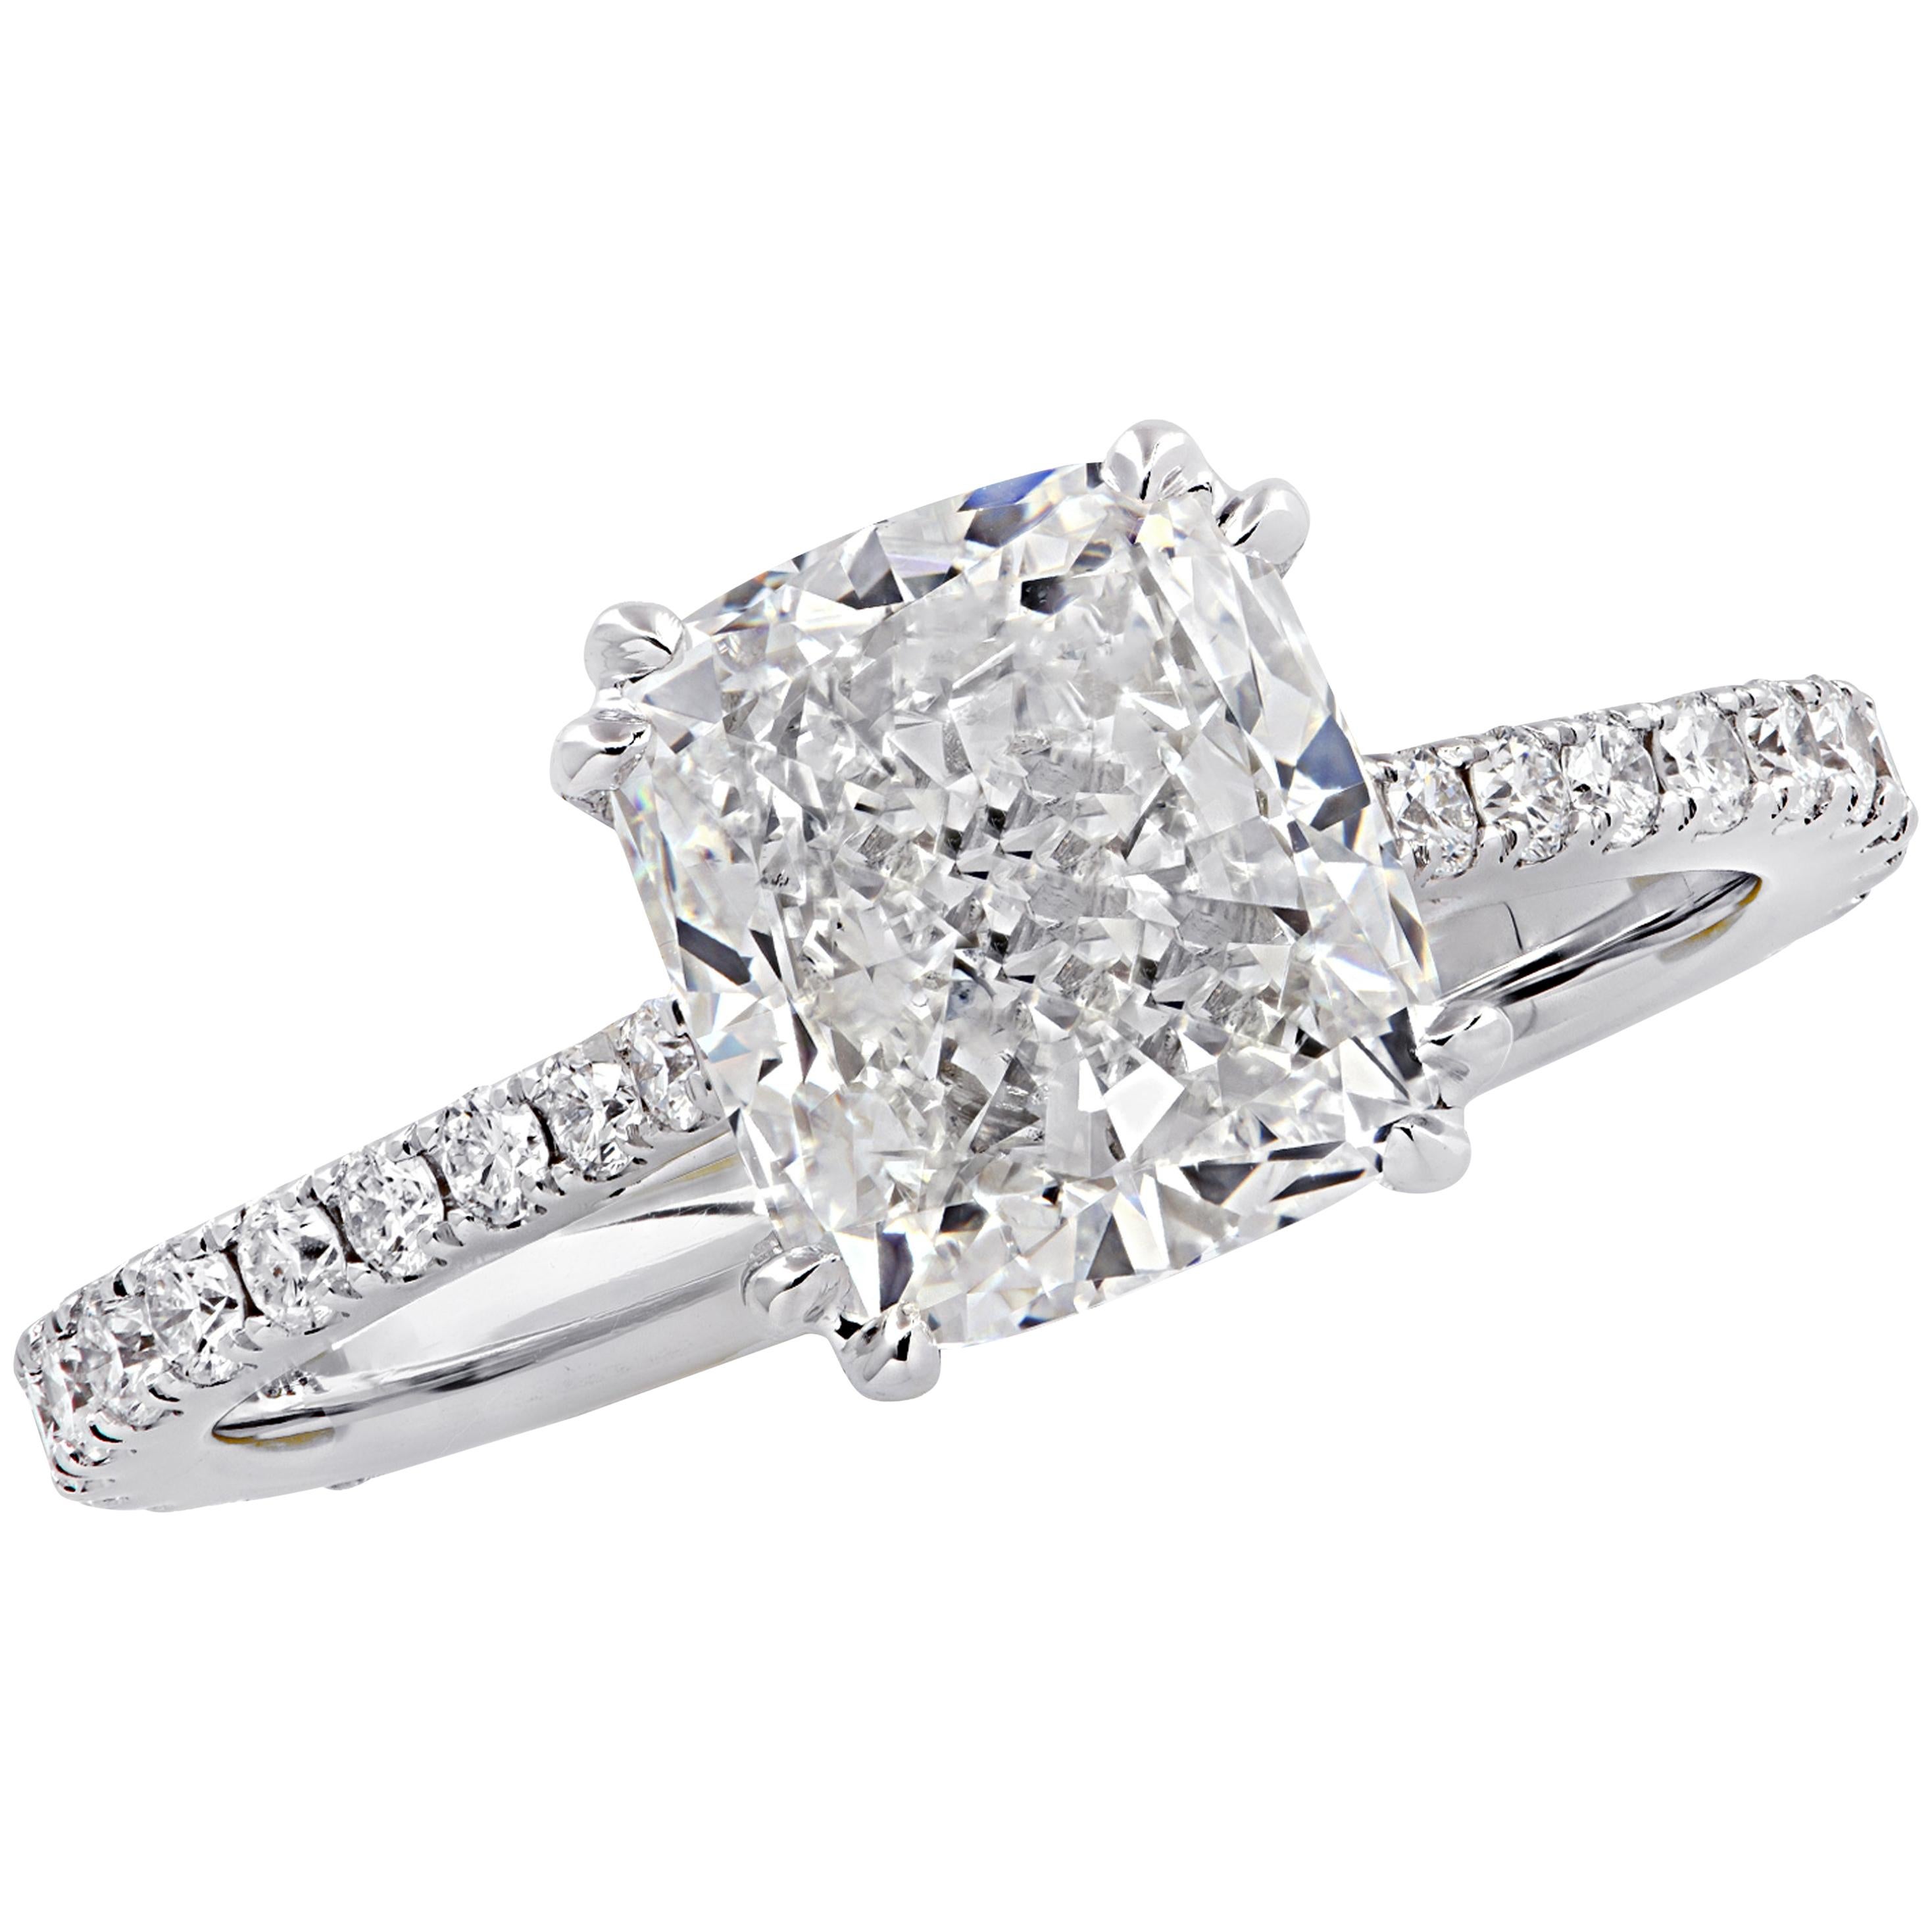 Vivid Diamonds GIA Certified 2.52 Carat Cushion Cut Engagement Ring